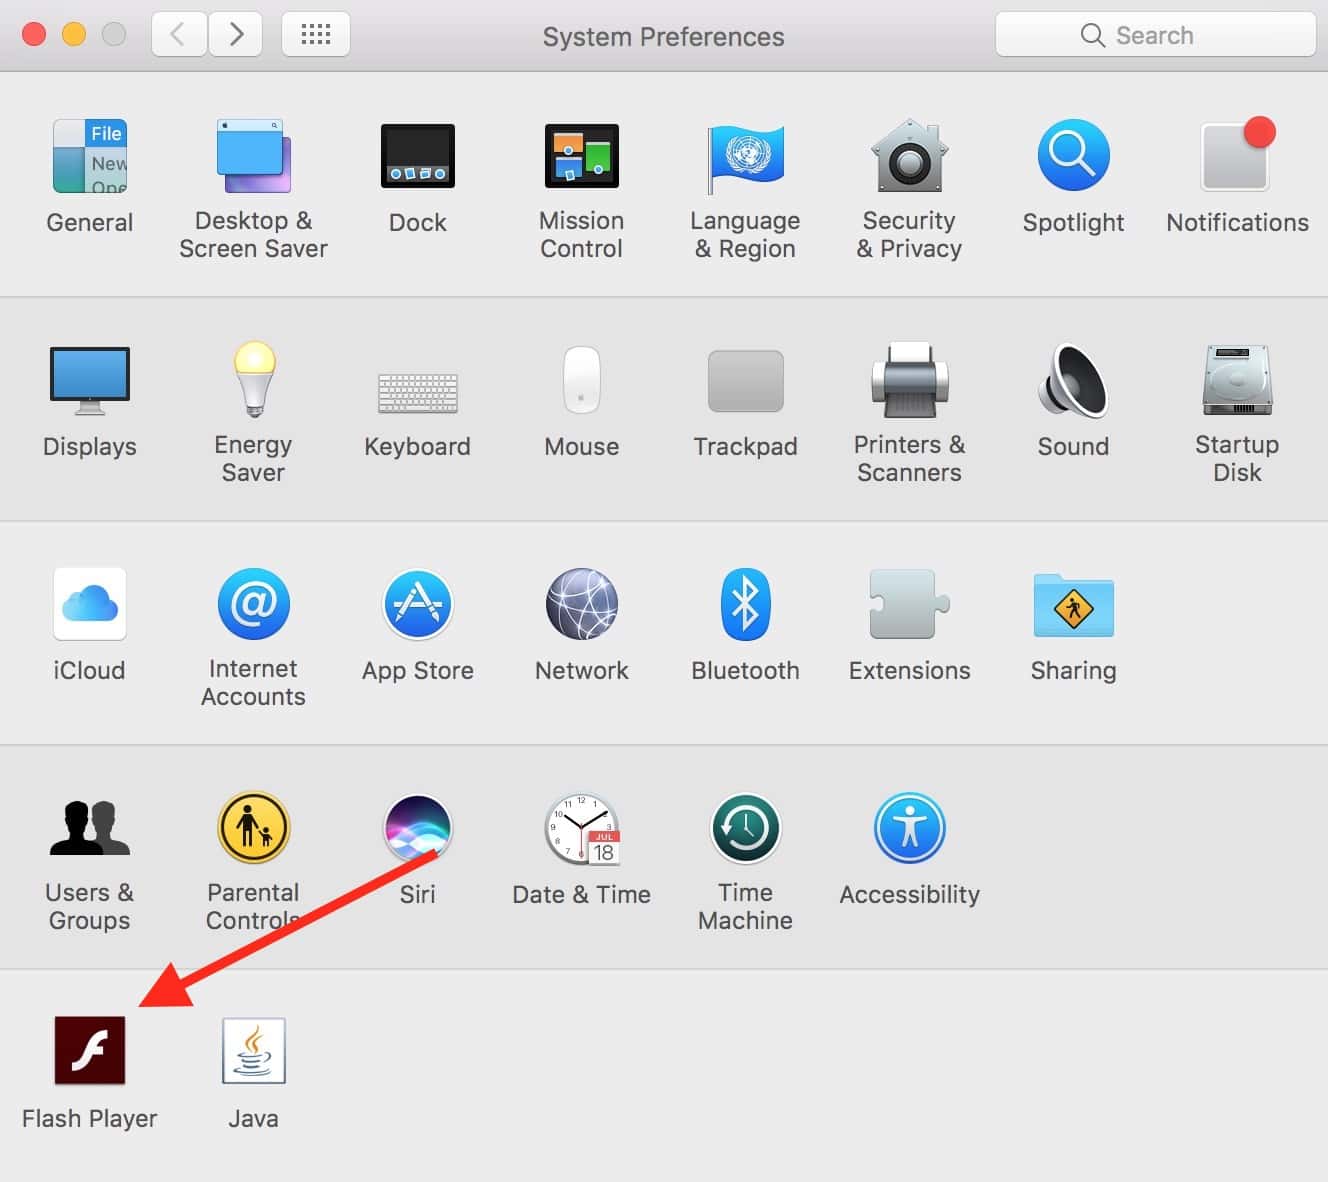 update adobe flash player for mac